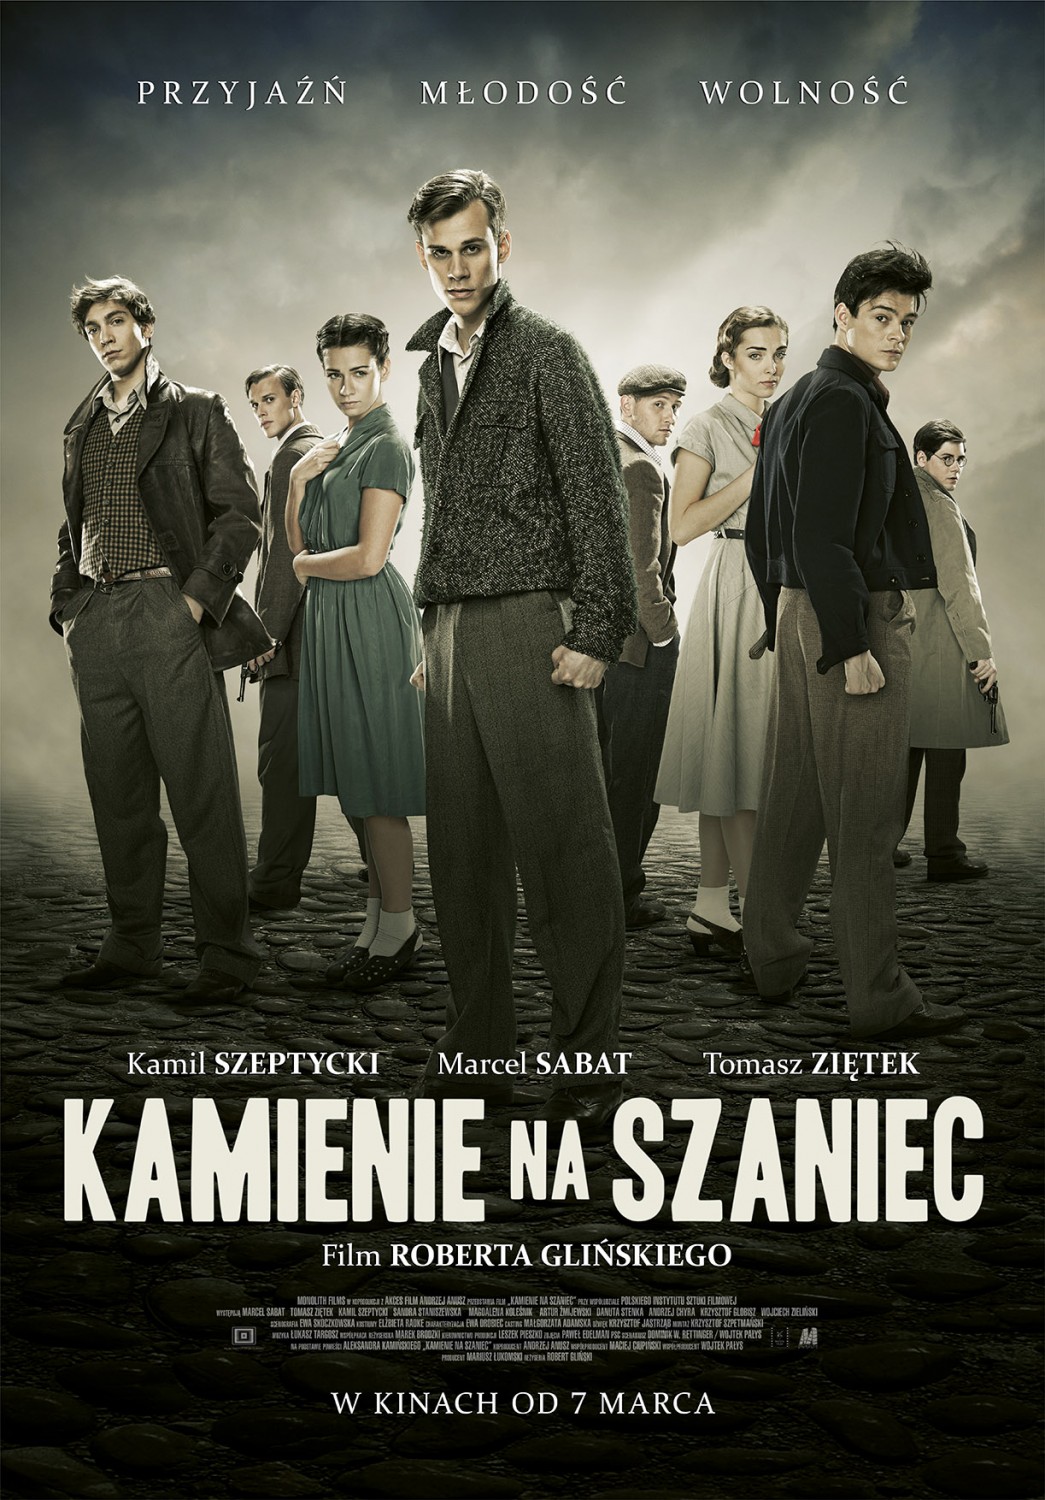 Extra Large Movie Poster Image for Kamienie na szaniec (#6 of 8)